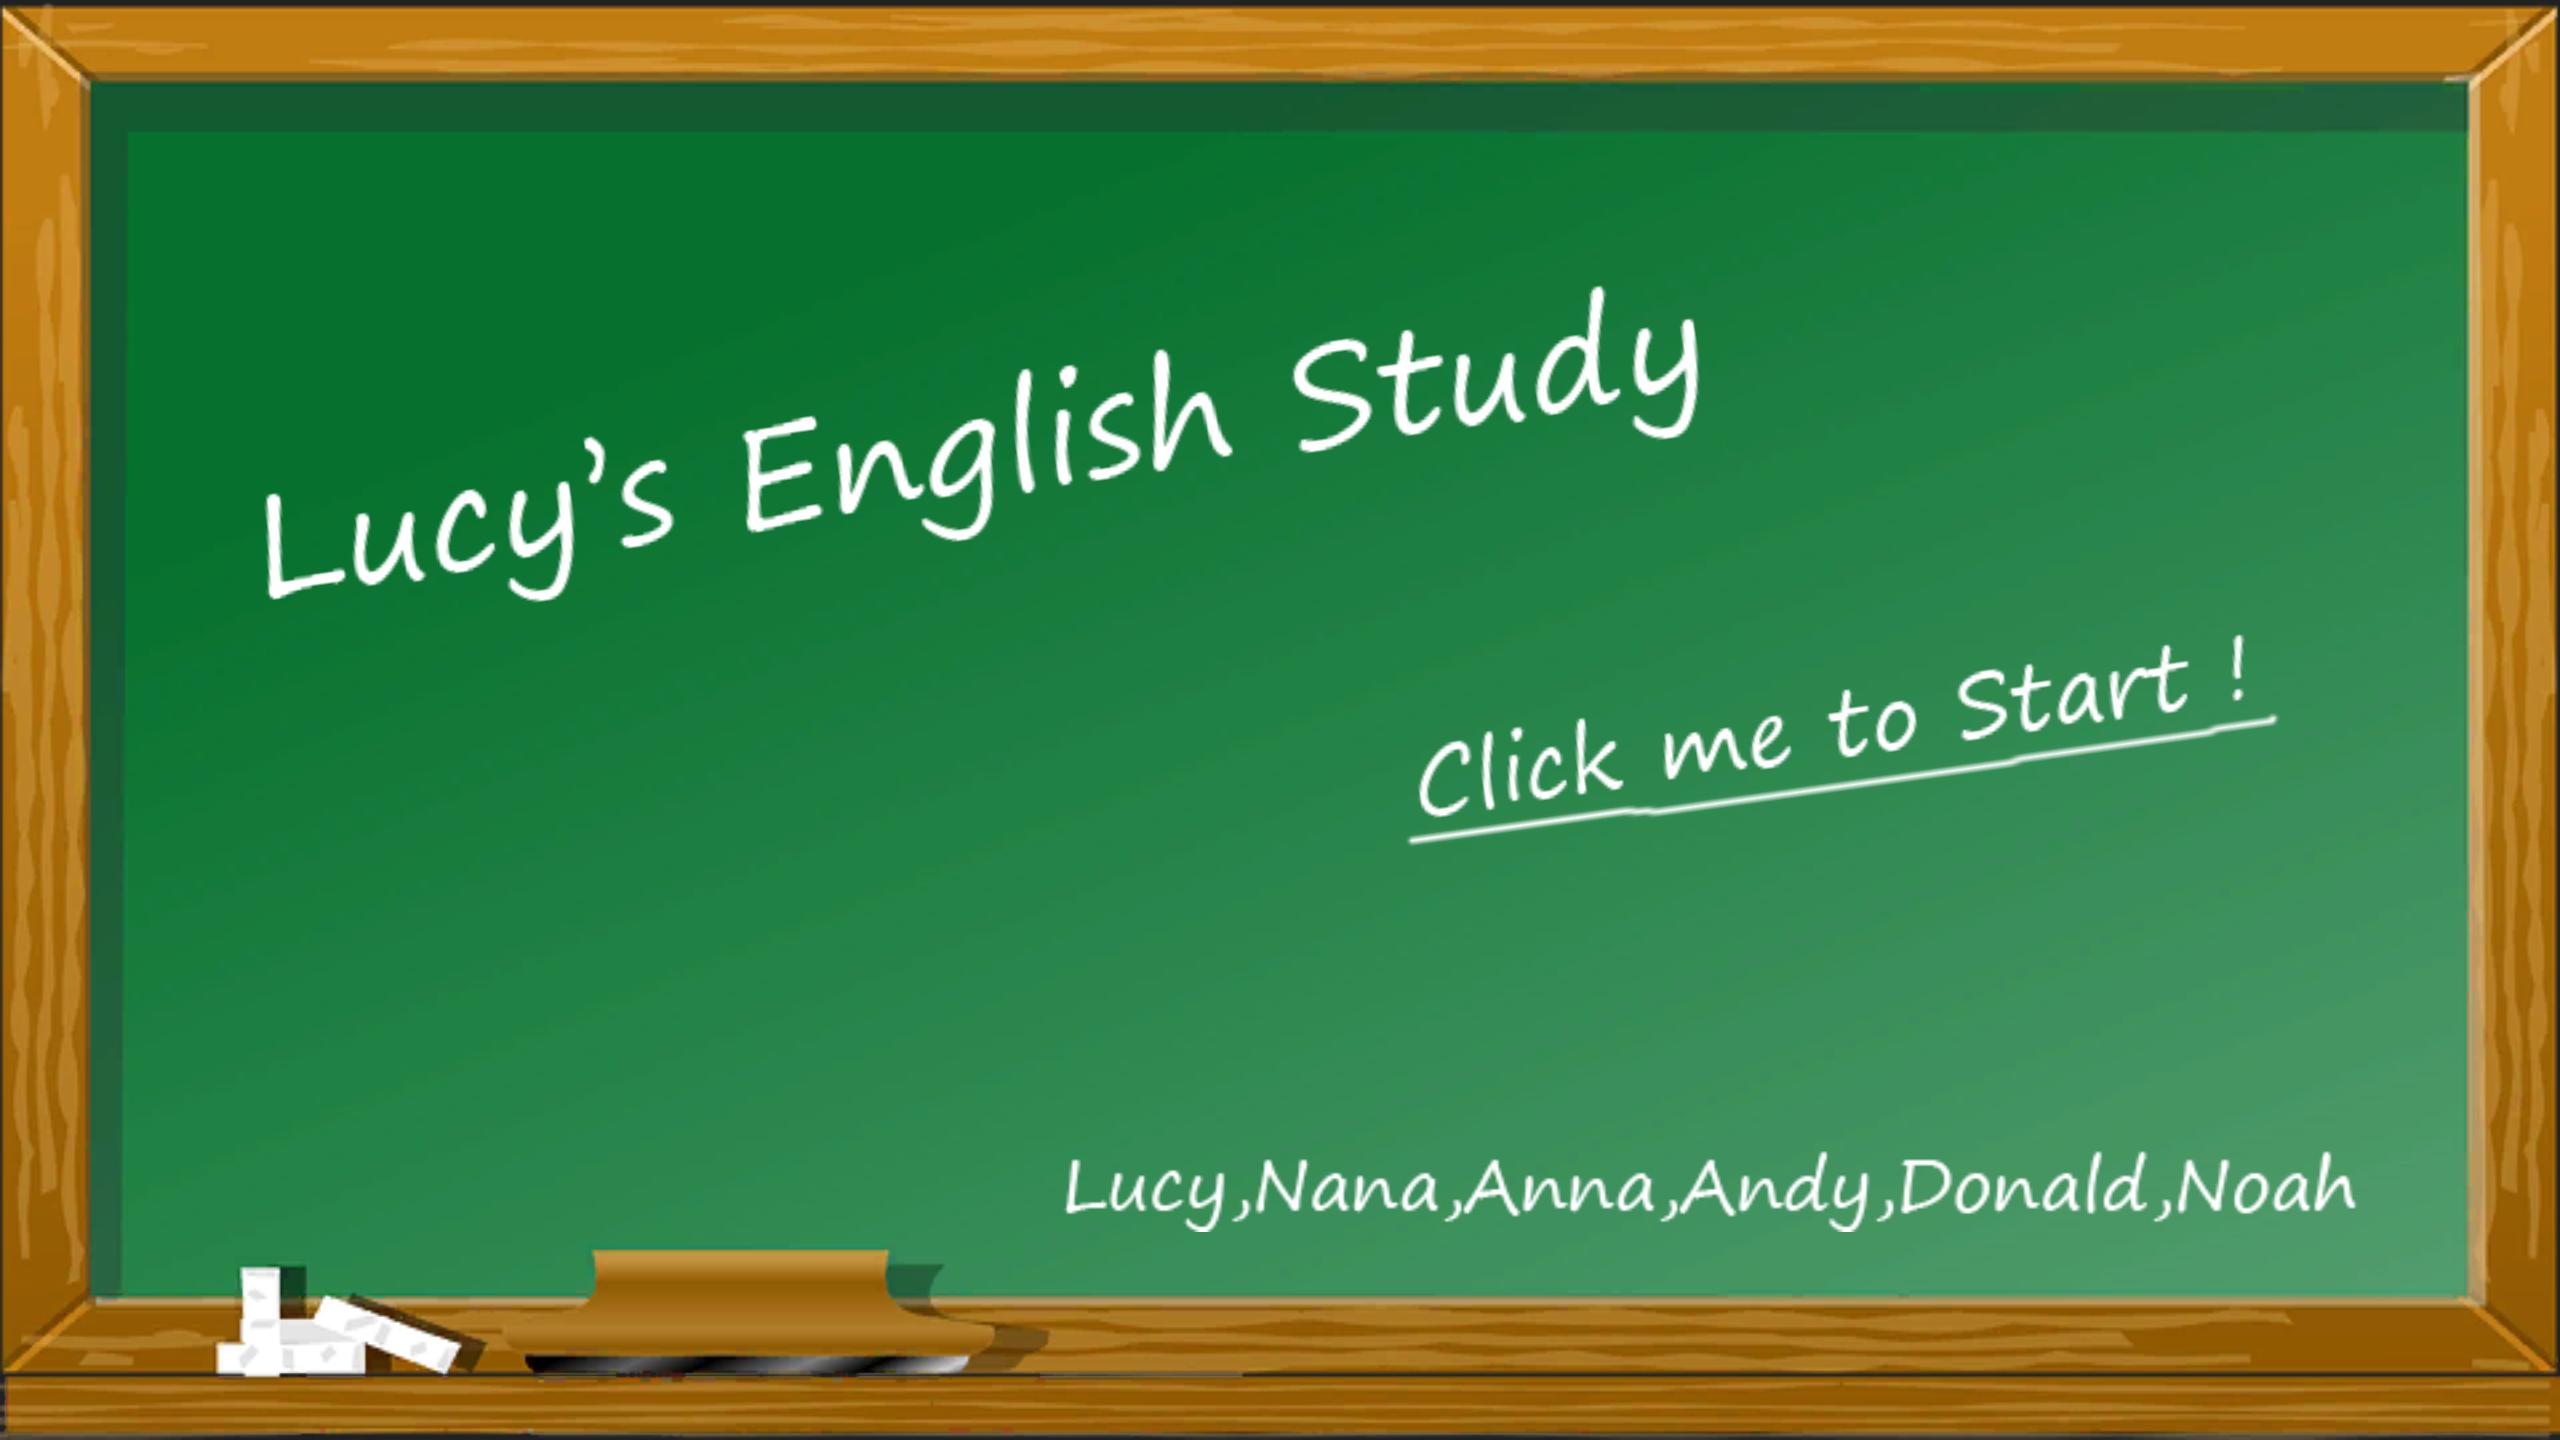 Study по английски. English study posters. We study English надпись. Study poster.